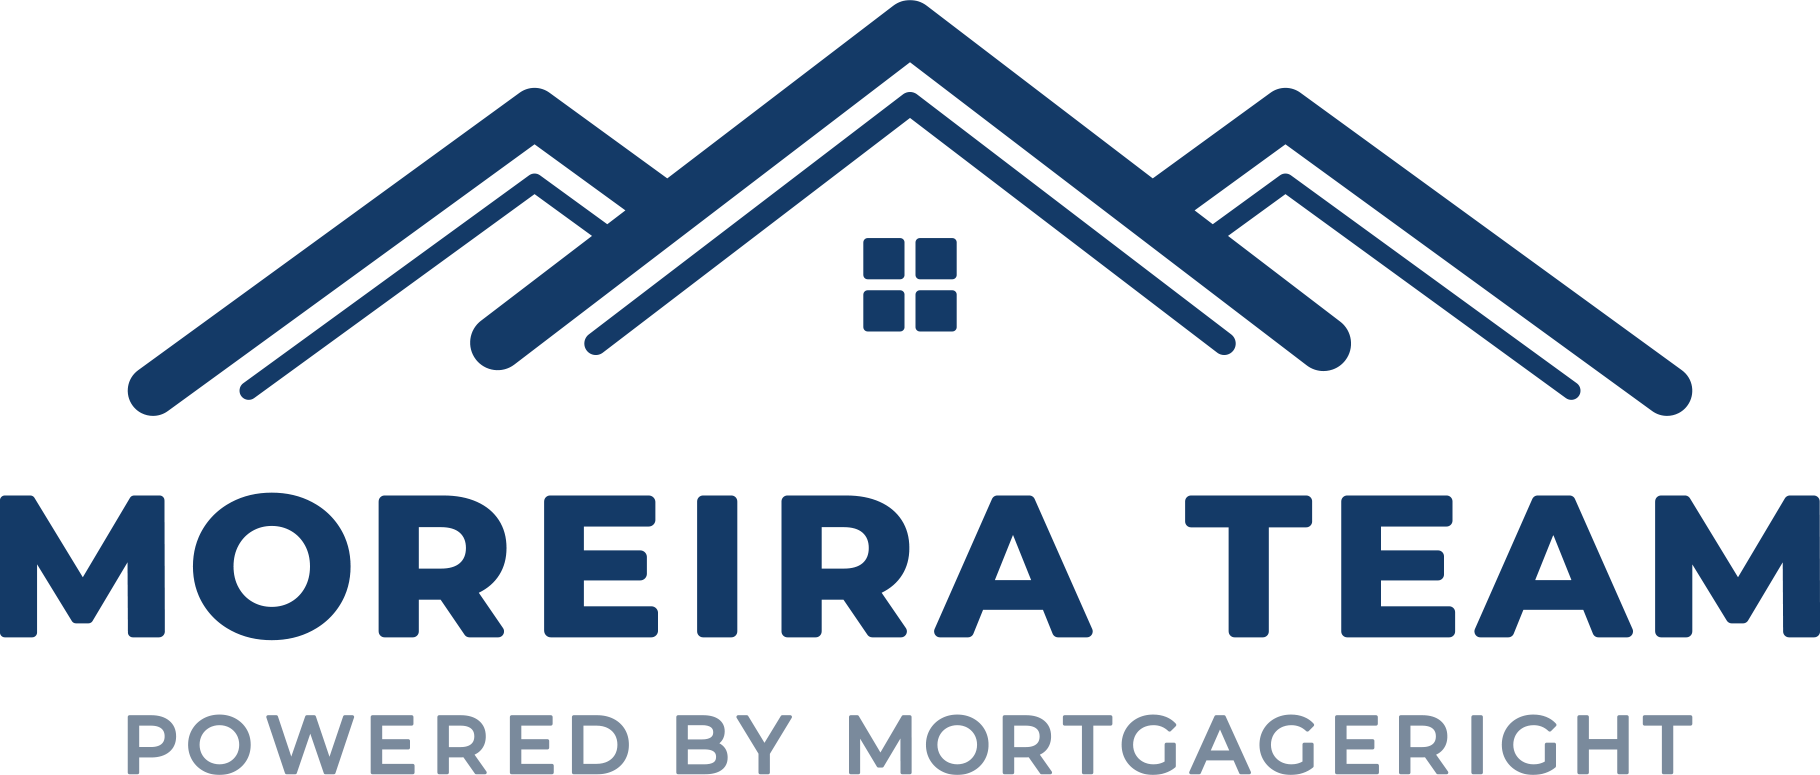 Moreira Team | MortgageRight